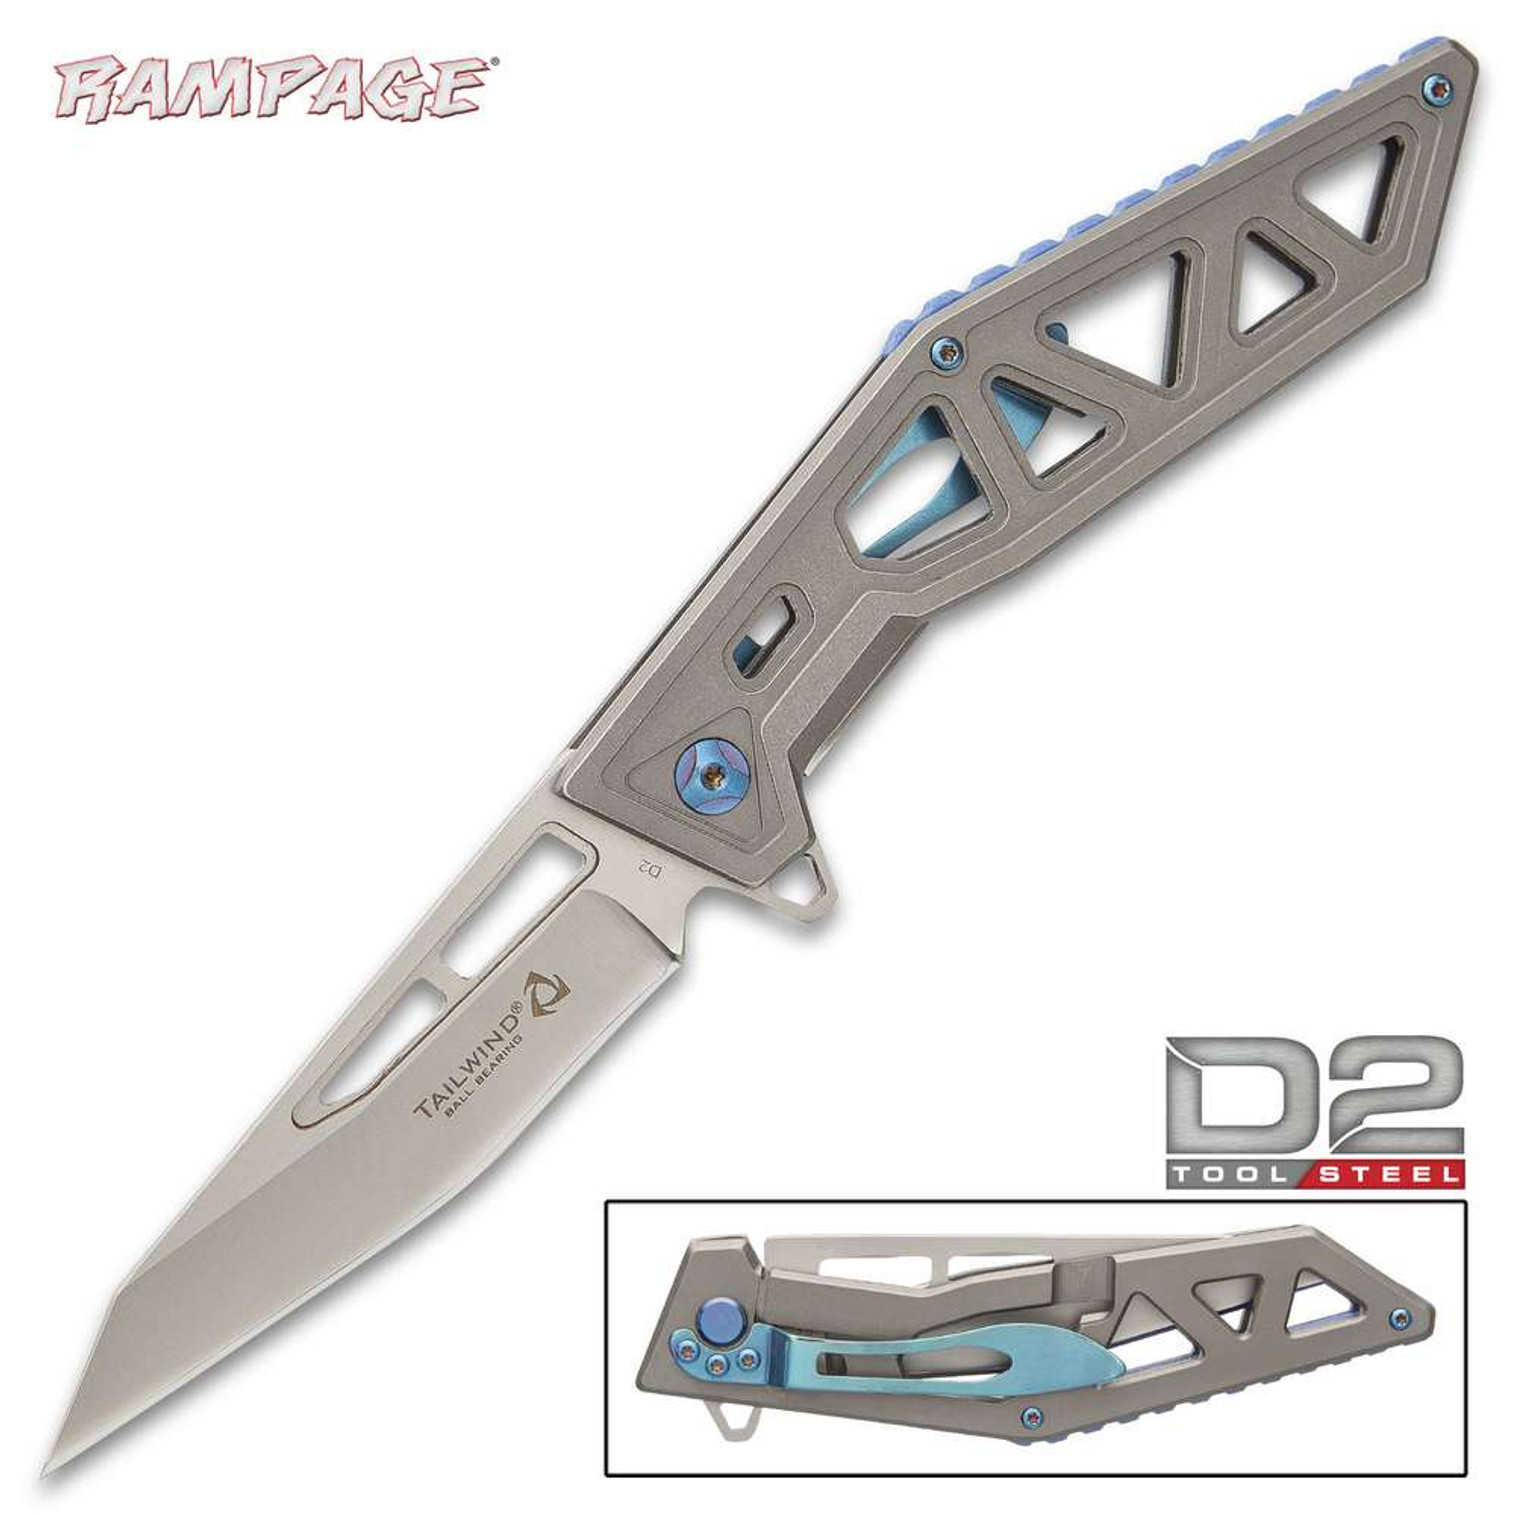 Rampage Tailwind D2 Skeletonized Pocket Knife